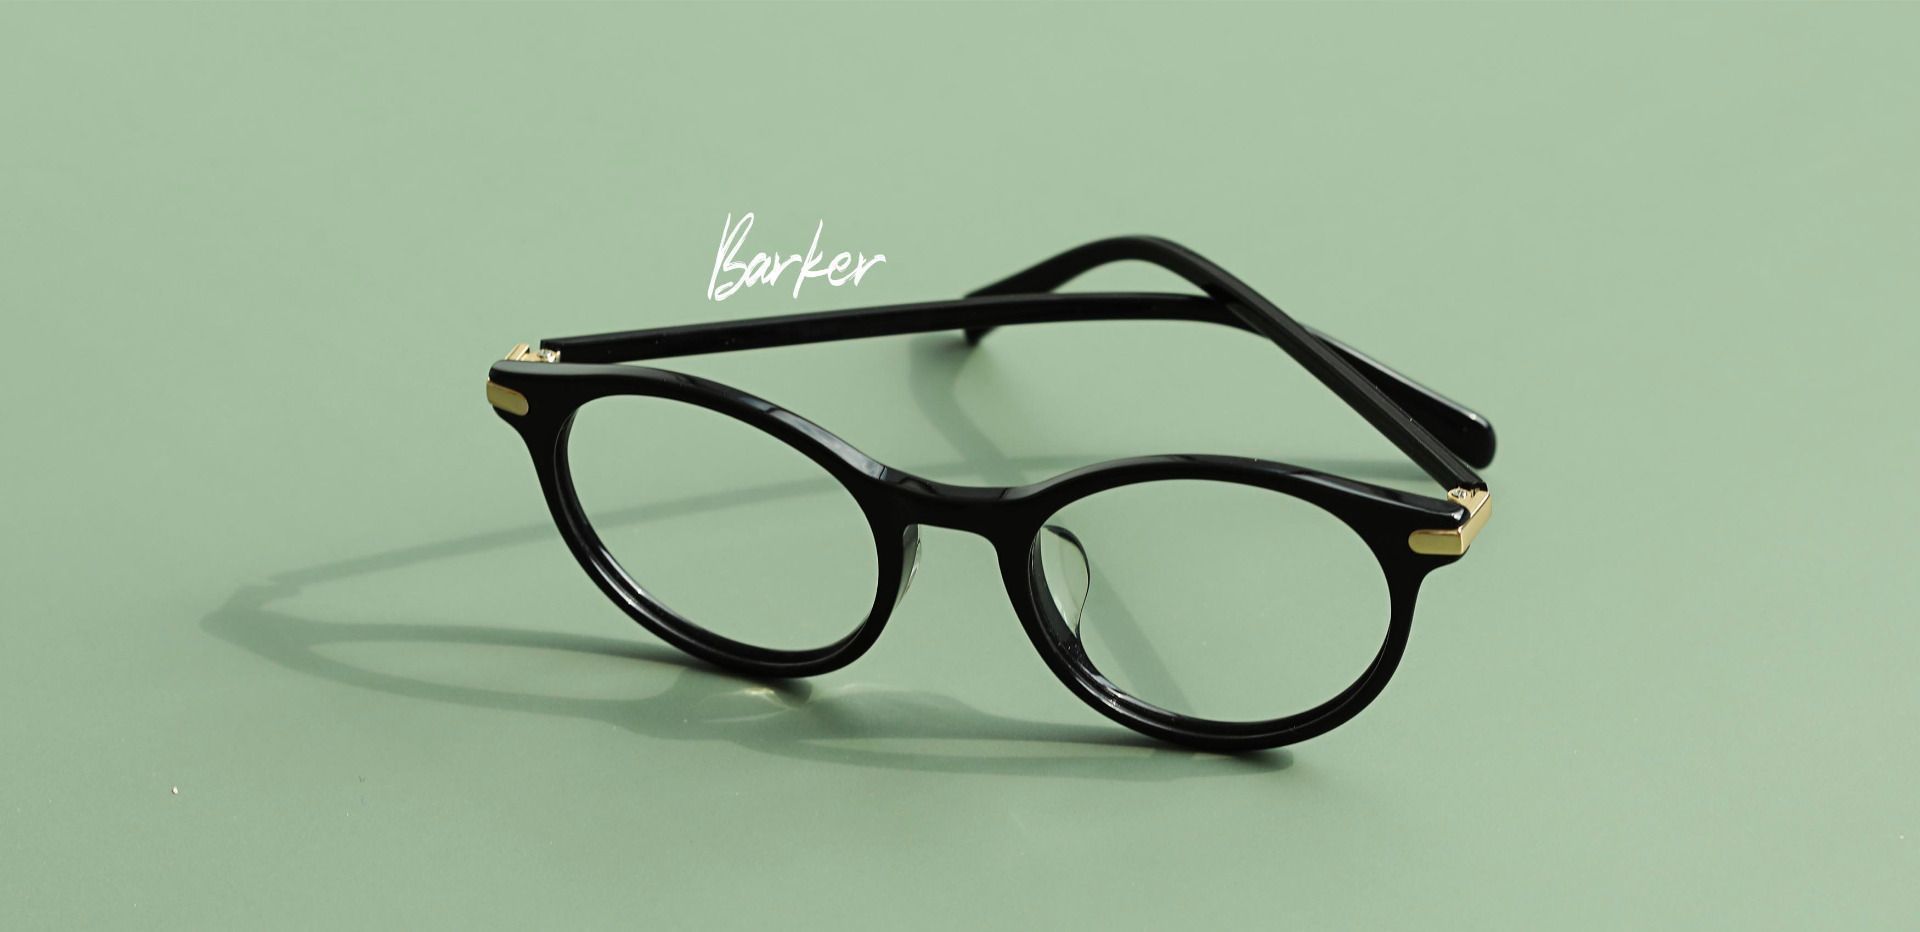 Barker Round Prescription Glasses - Black